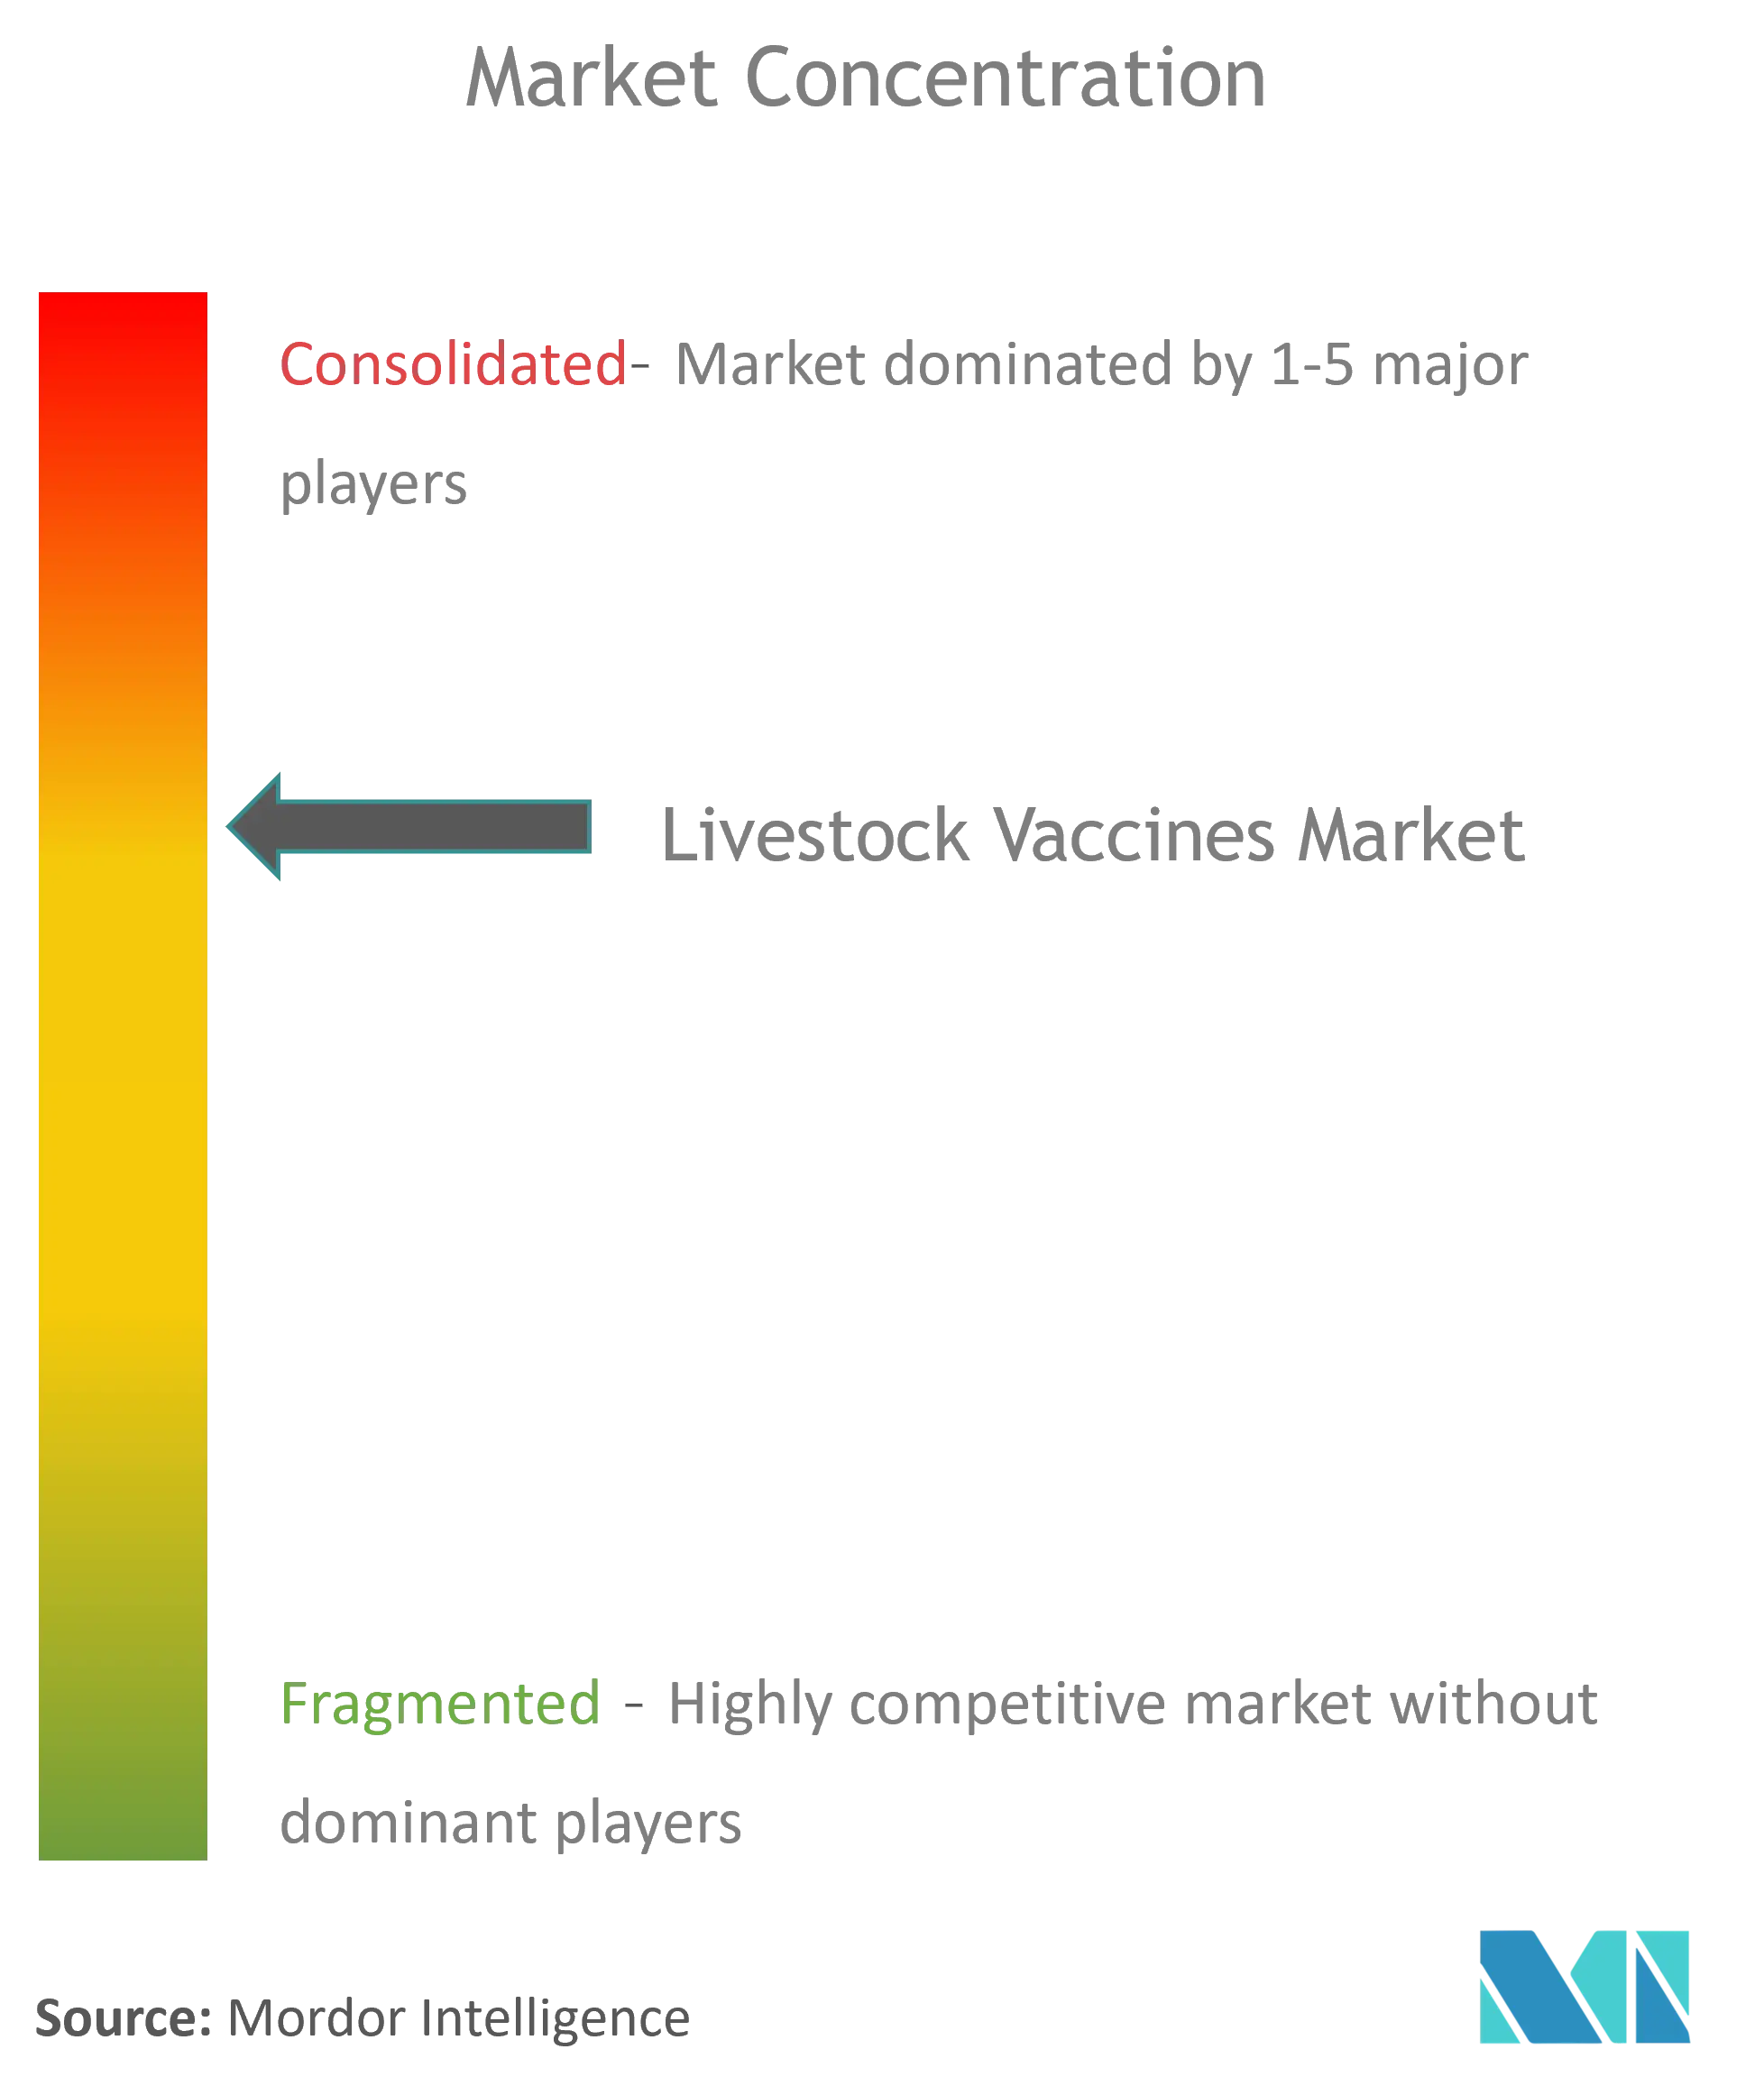 Livestock Vaccines Market Concentration